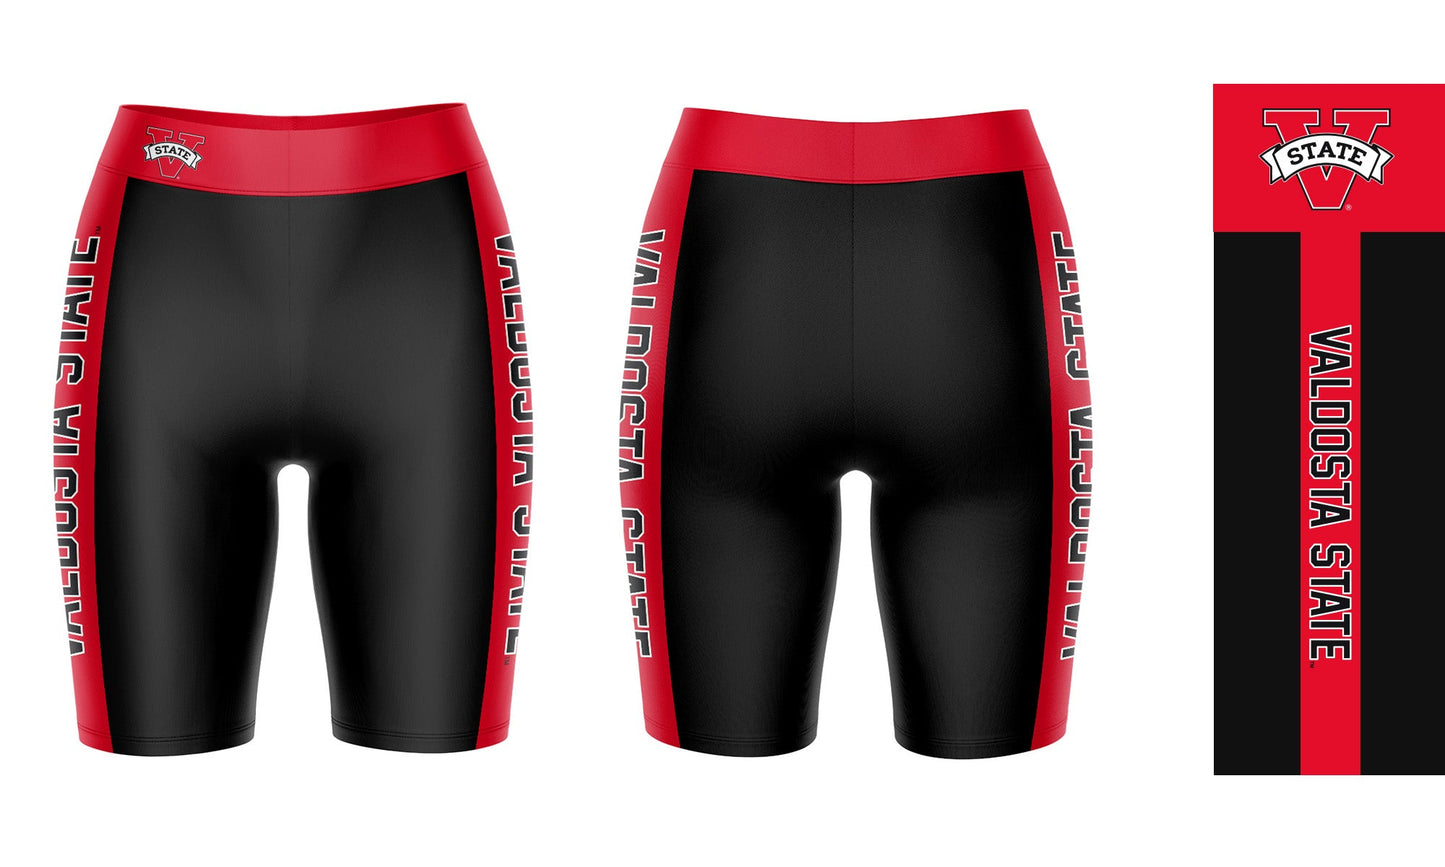 Valdosta State Blazers Vive La Fete Game Day Logo on Waistband and Red Stripes Black Women Bike Short 9 Inseam"